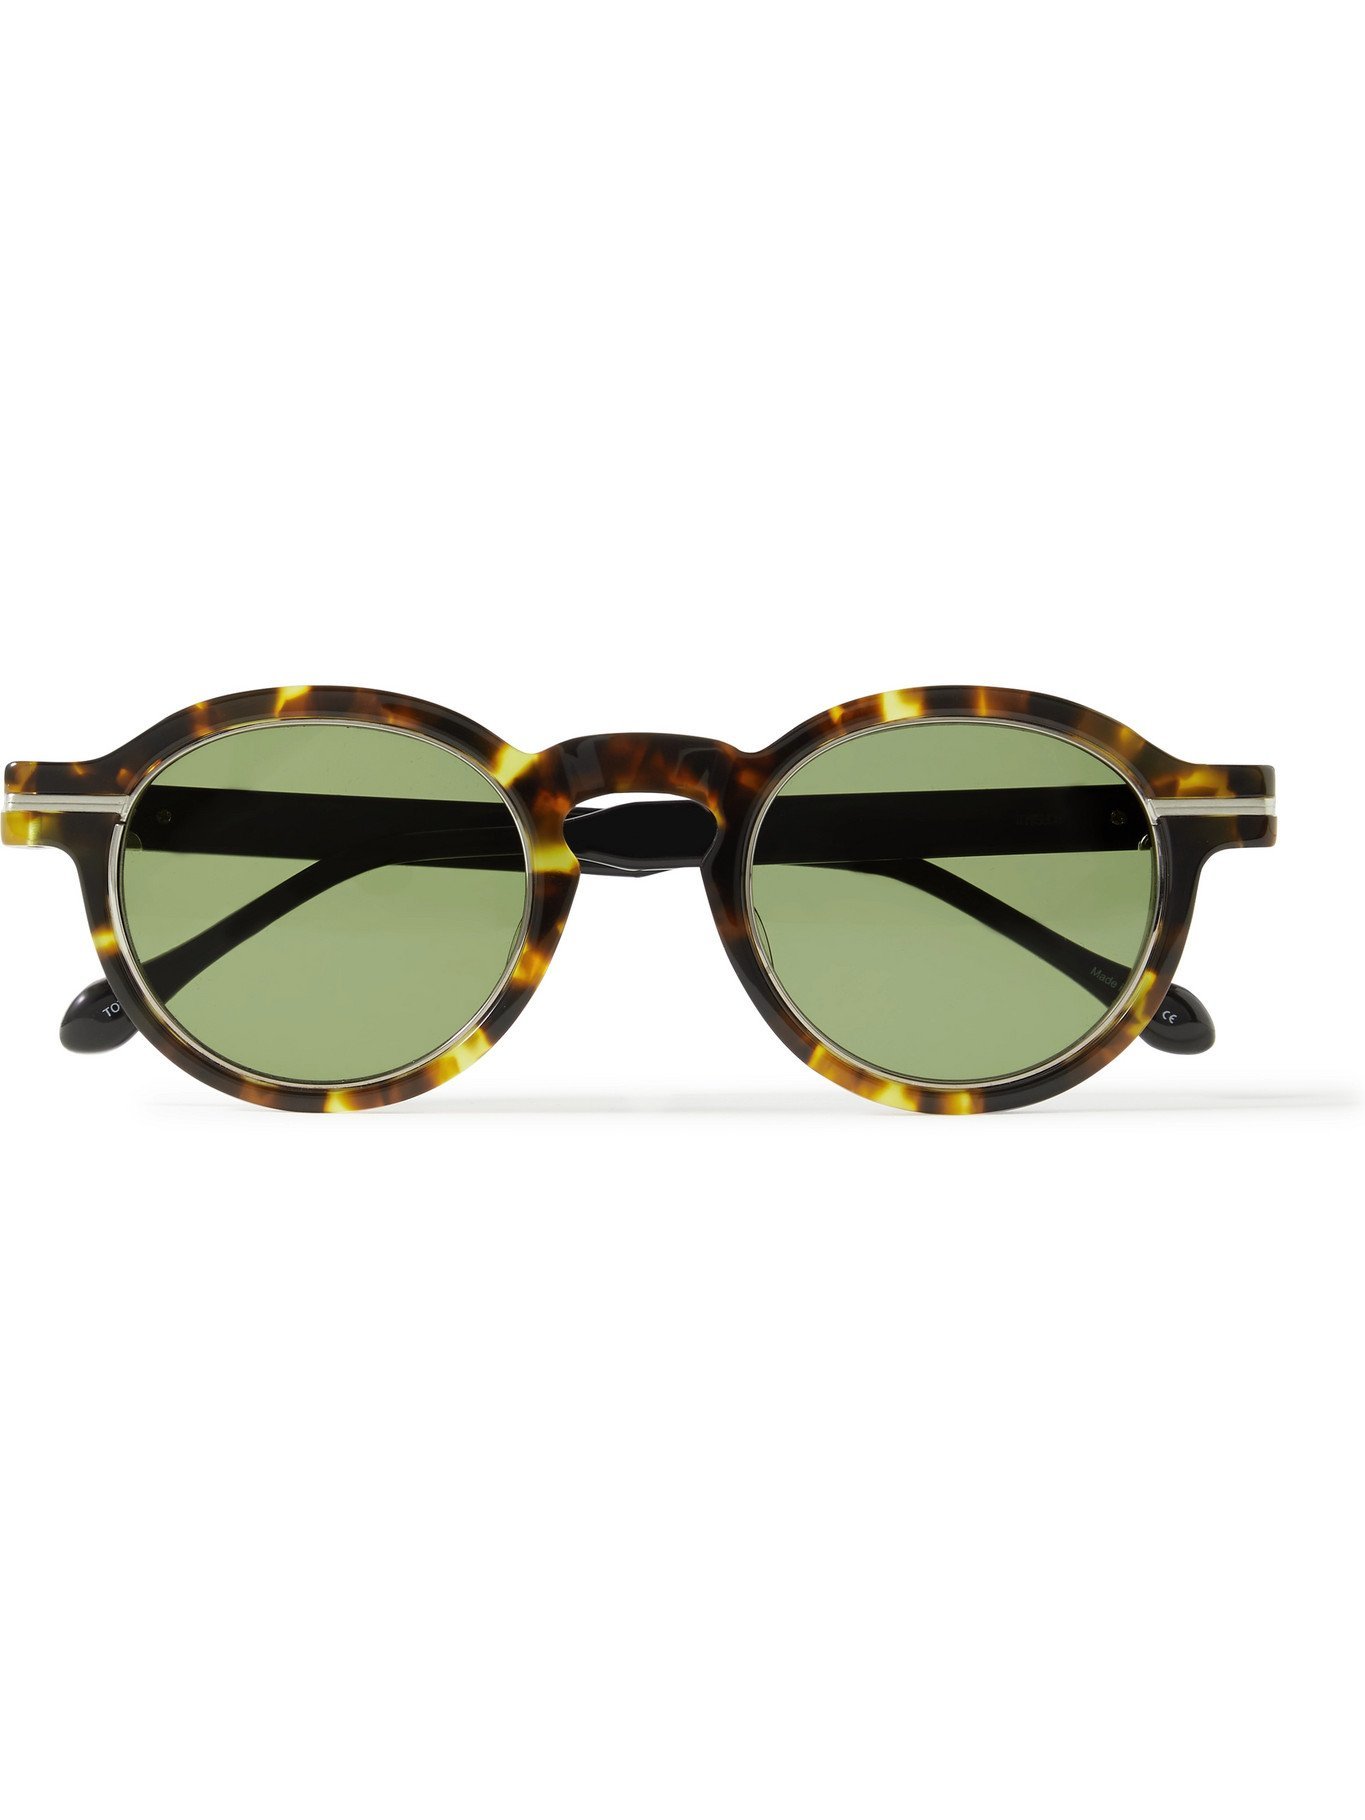 MATSUDA - Round-Frame Tortoiseshell Acetate and Titanium Sunglasses Matsuda